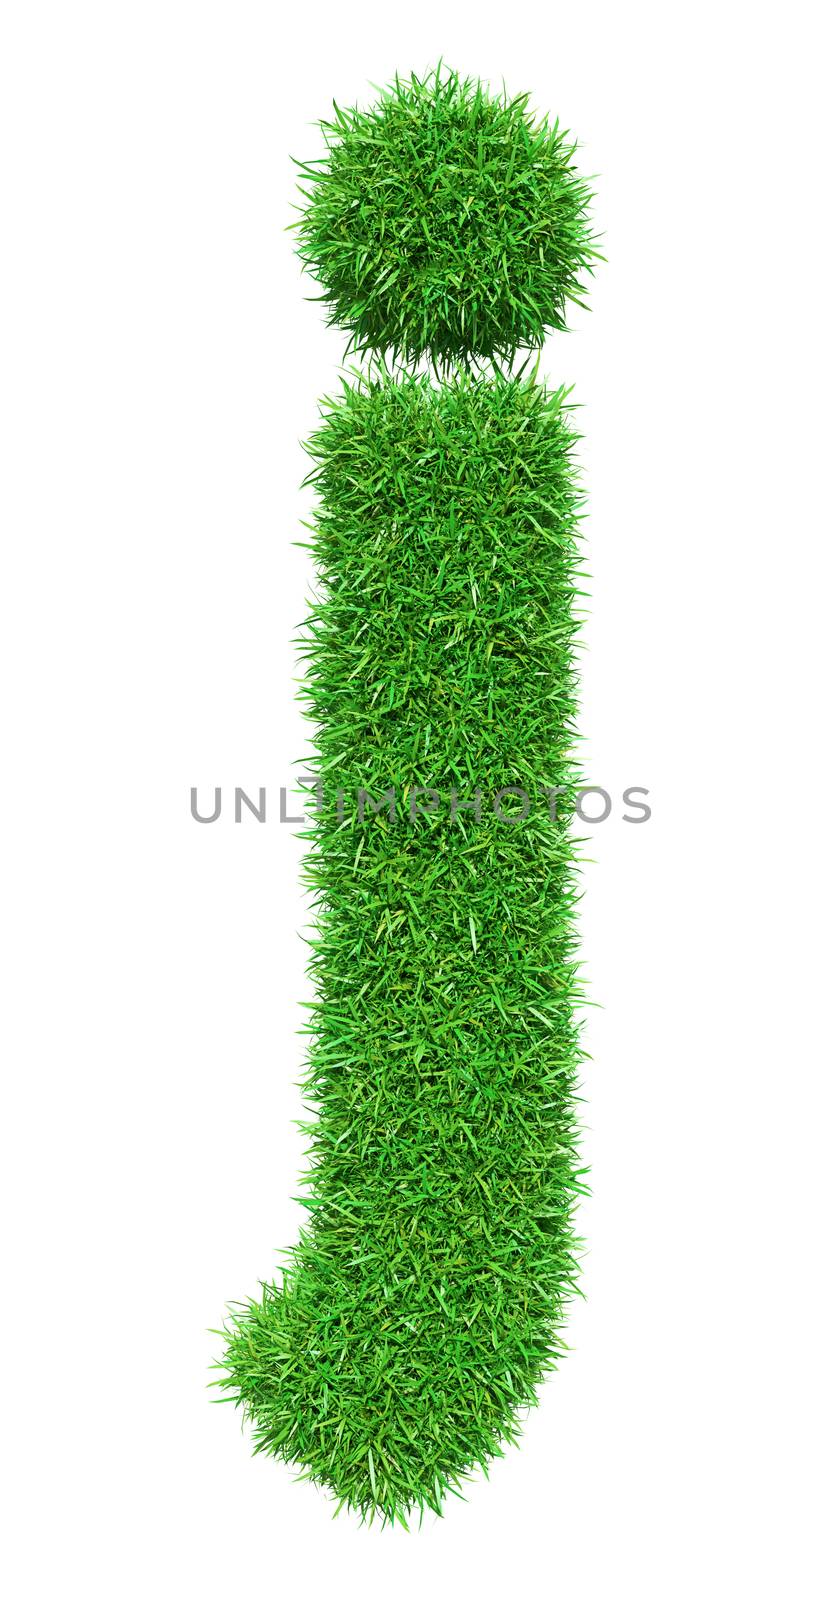 Green Grass Letter J. Isolated On White Background. Font For Your Design. 3D Illustration